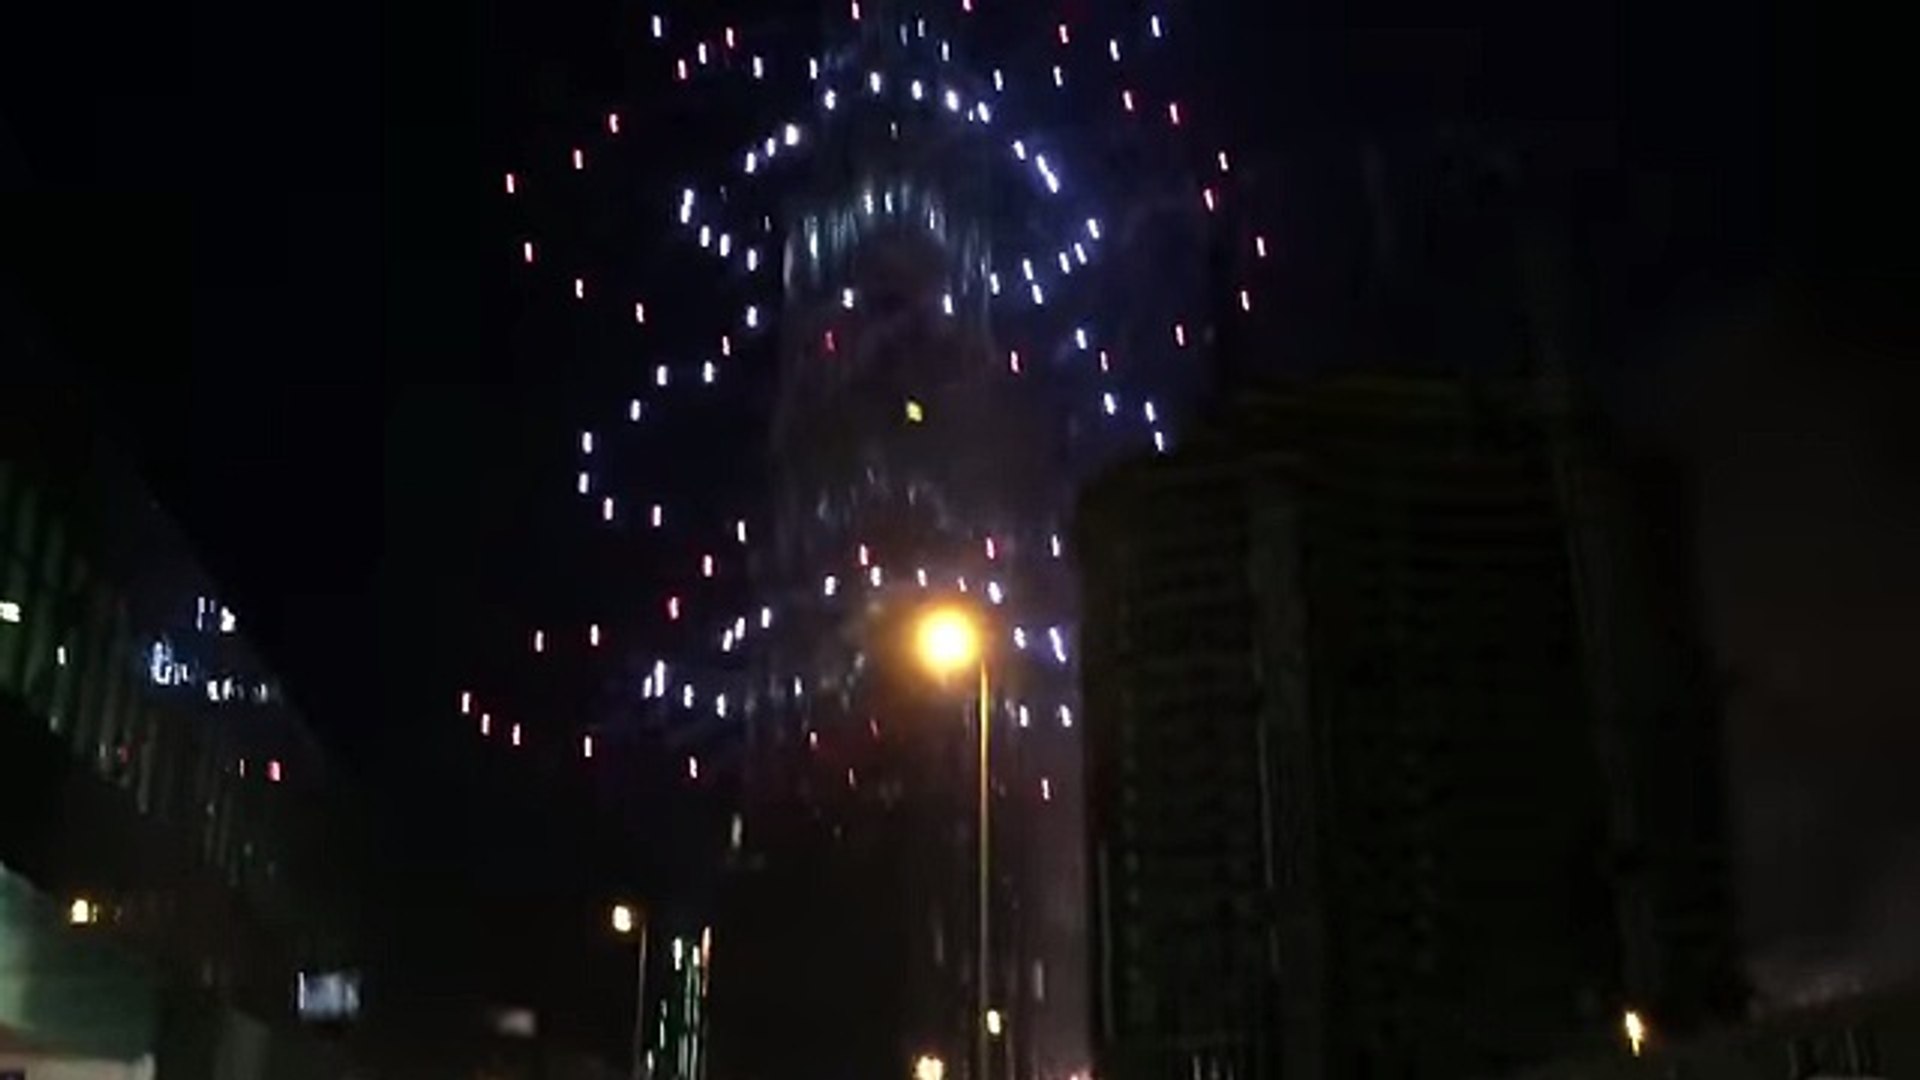 Burj Khalifa Dubai Fireworks 2016 top songs 2016 best songs new songs upcoming songs latest songs sa